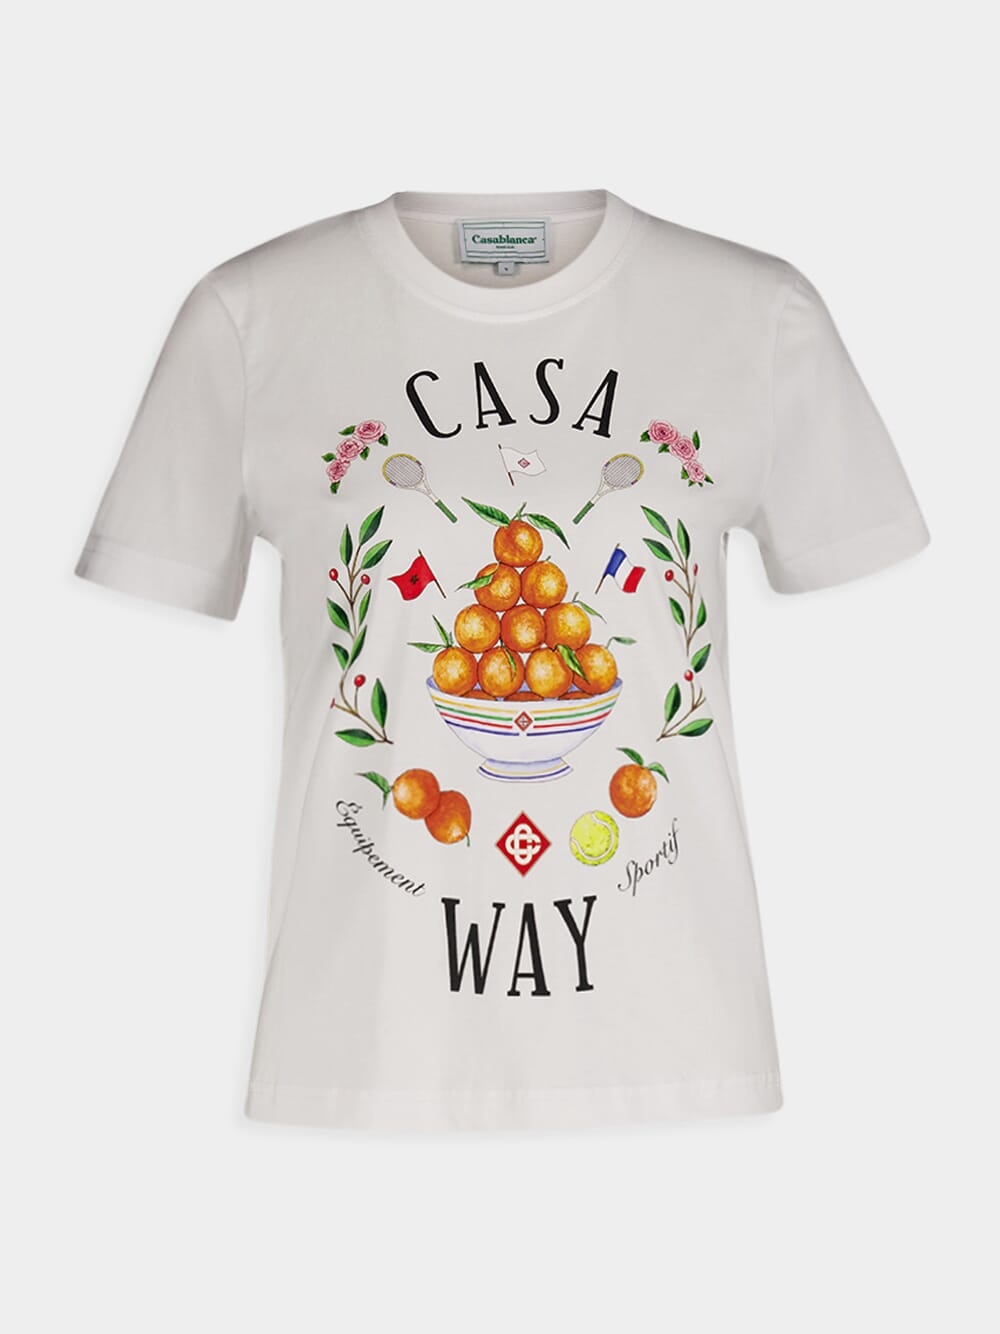 CasablancaCasa Way Cotton T-Shirt at Fashion Clinic